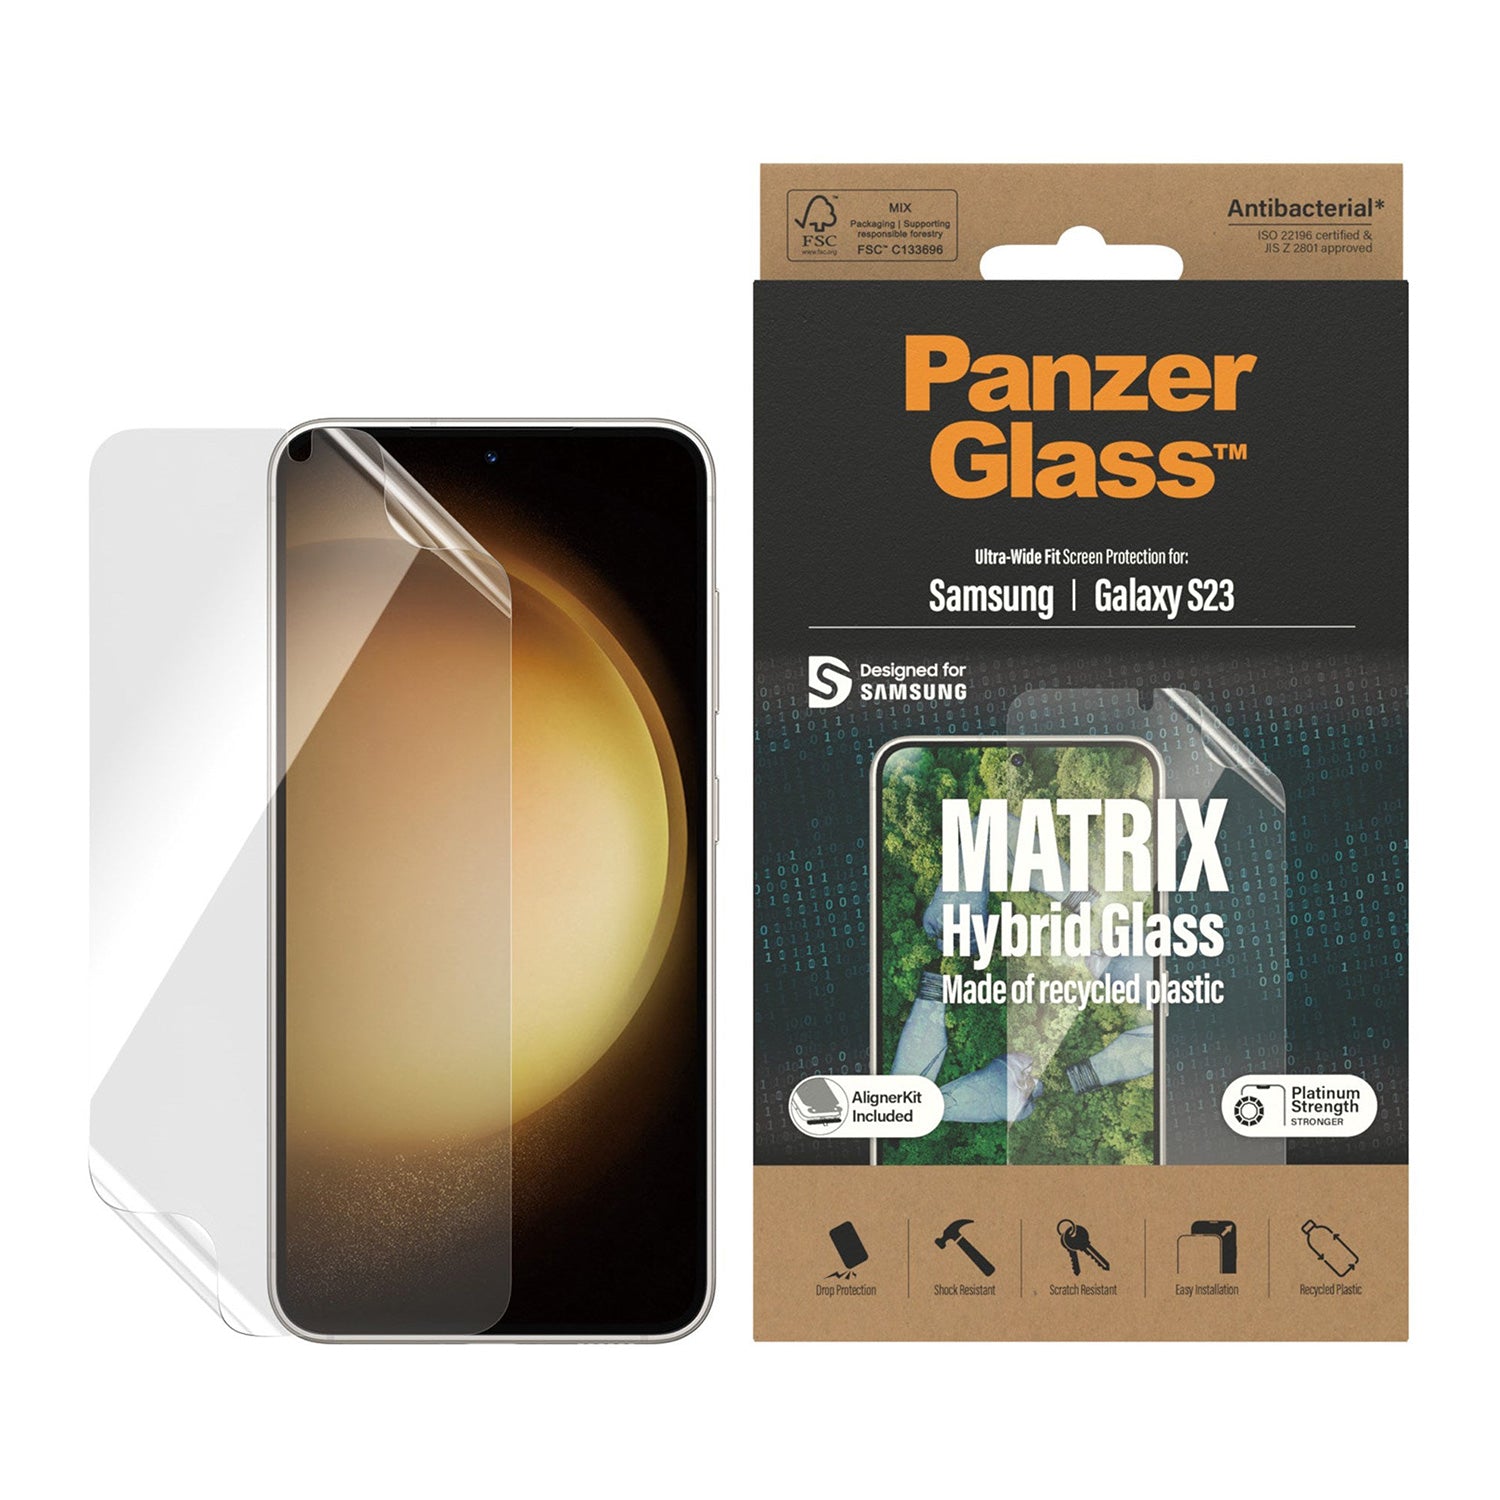 PanzerGlass Samsung Galaxy S23 Screen Protector Matrix Hybrid Glass with EasyAligner